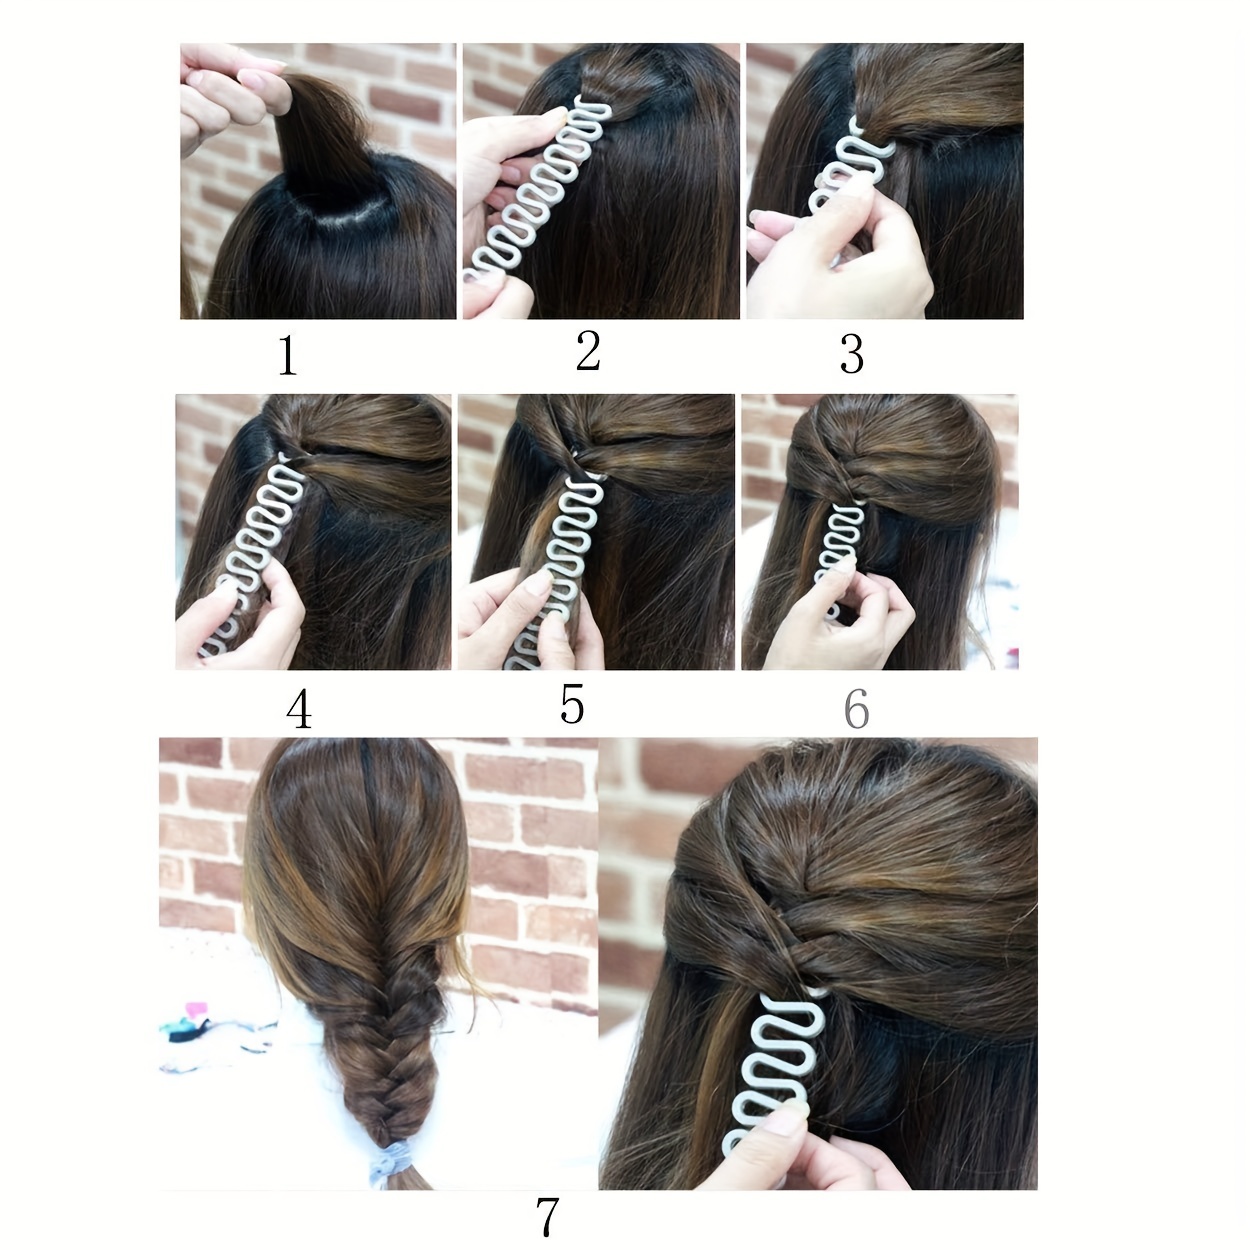 Vbestlife 4/9Pcs New Fashion Hair Bun Maker Braiding Styling Disk Twist Tools DIY Accessories 3Types,Hair Styling Accessories,Hair Braid Tools, Size